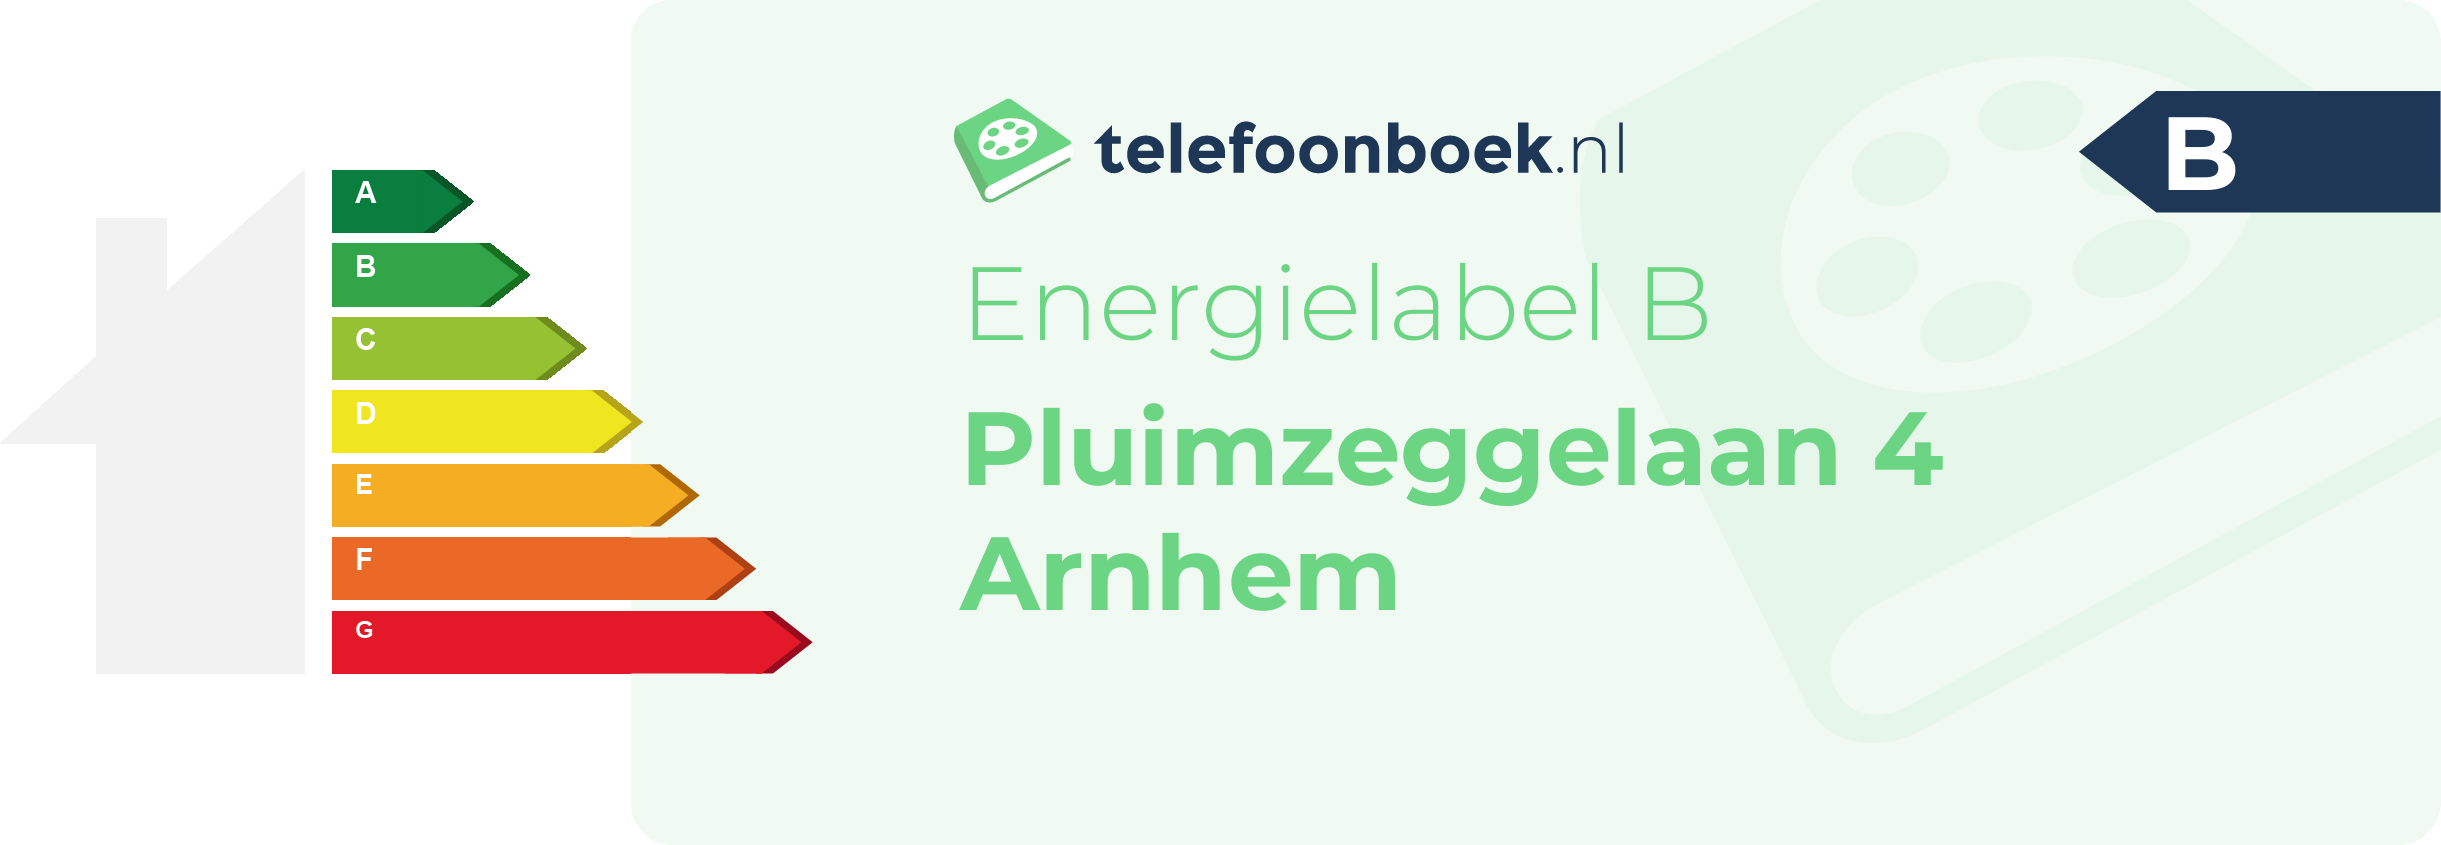 Energielabel Pluimzeggelaan 4 Arnhem